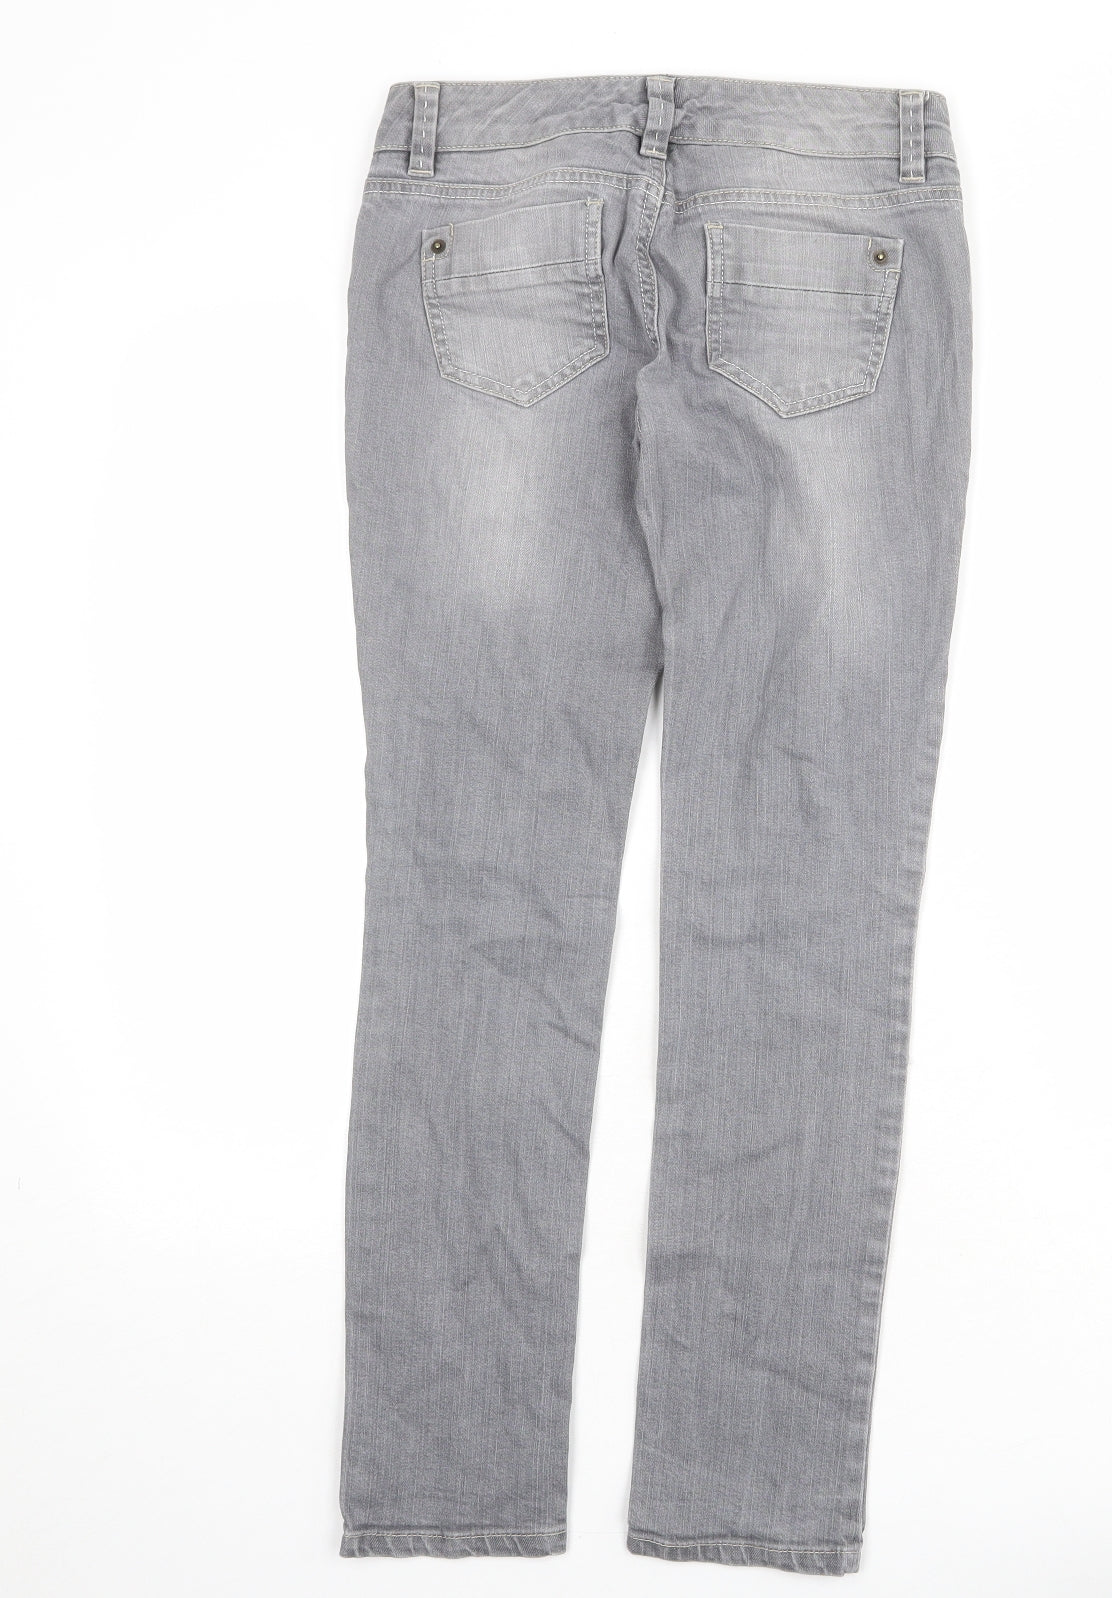 Miss Selfridge Womens Grey Cotton Skinny Jeans Size 8 Regular Zip